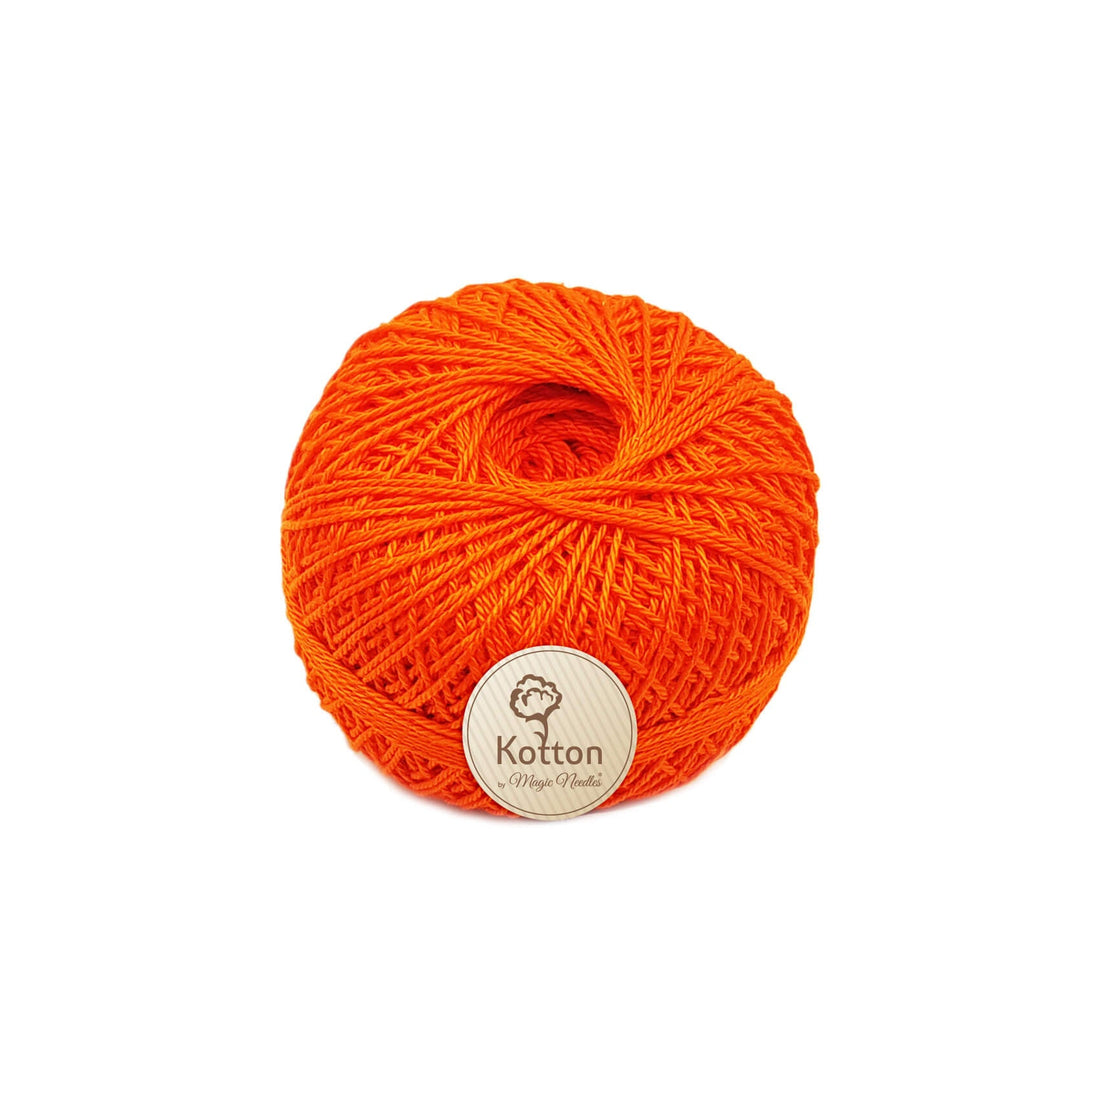 Kotton 3 ply Mercerised Cotton Yarn - Dark Orange 26